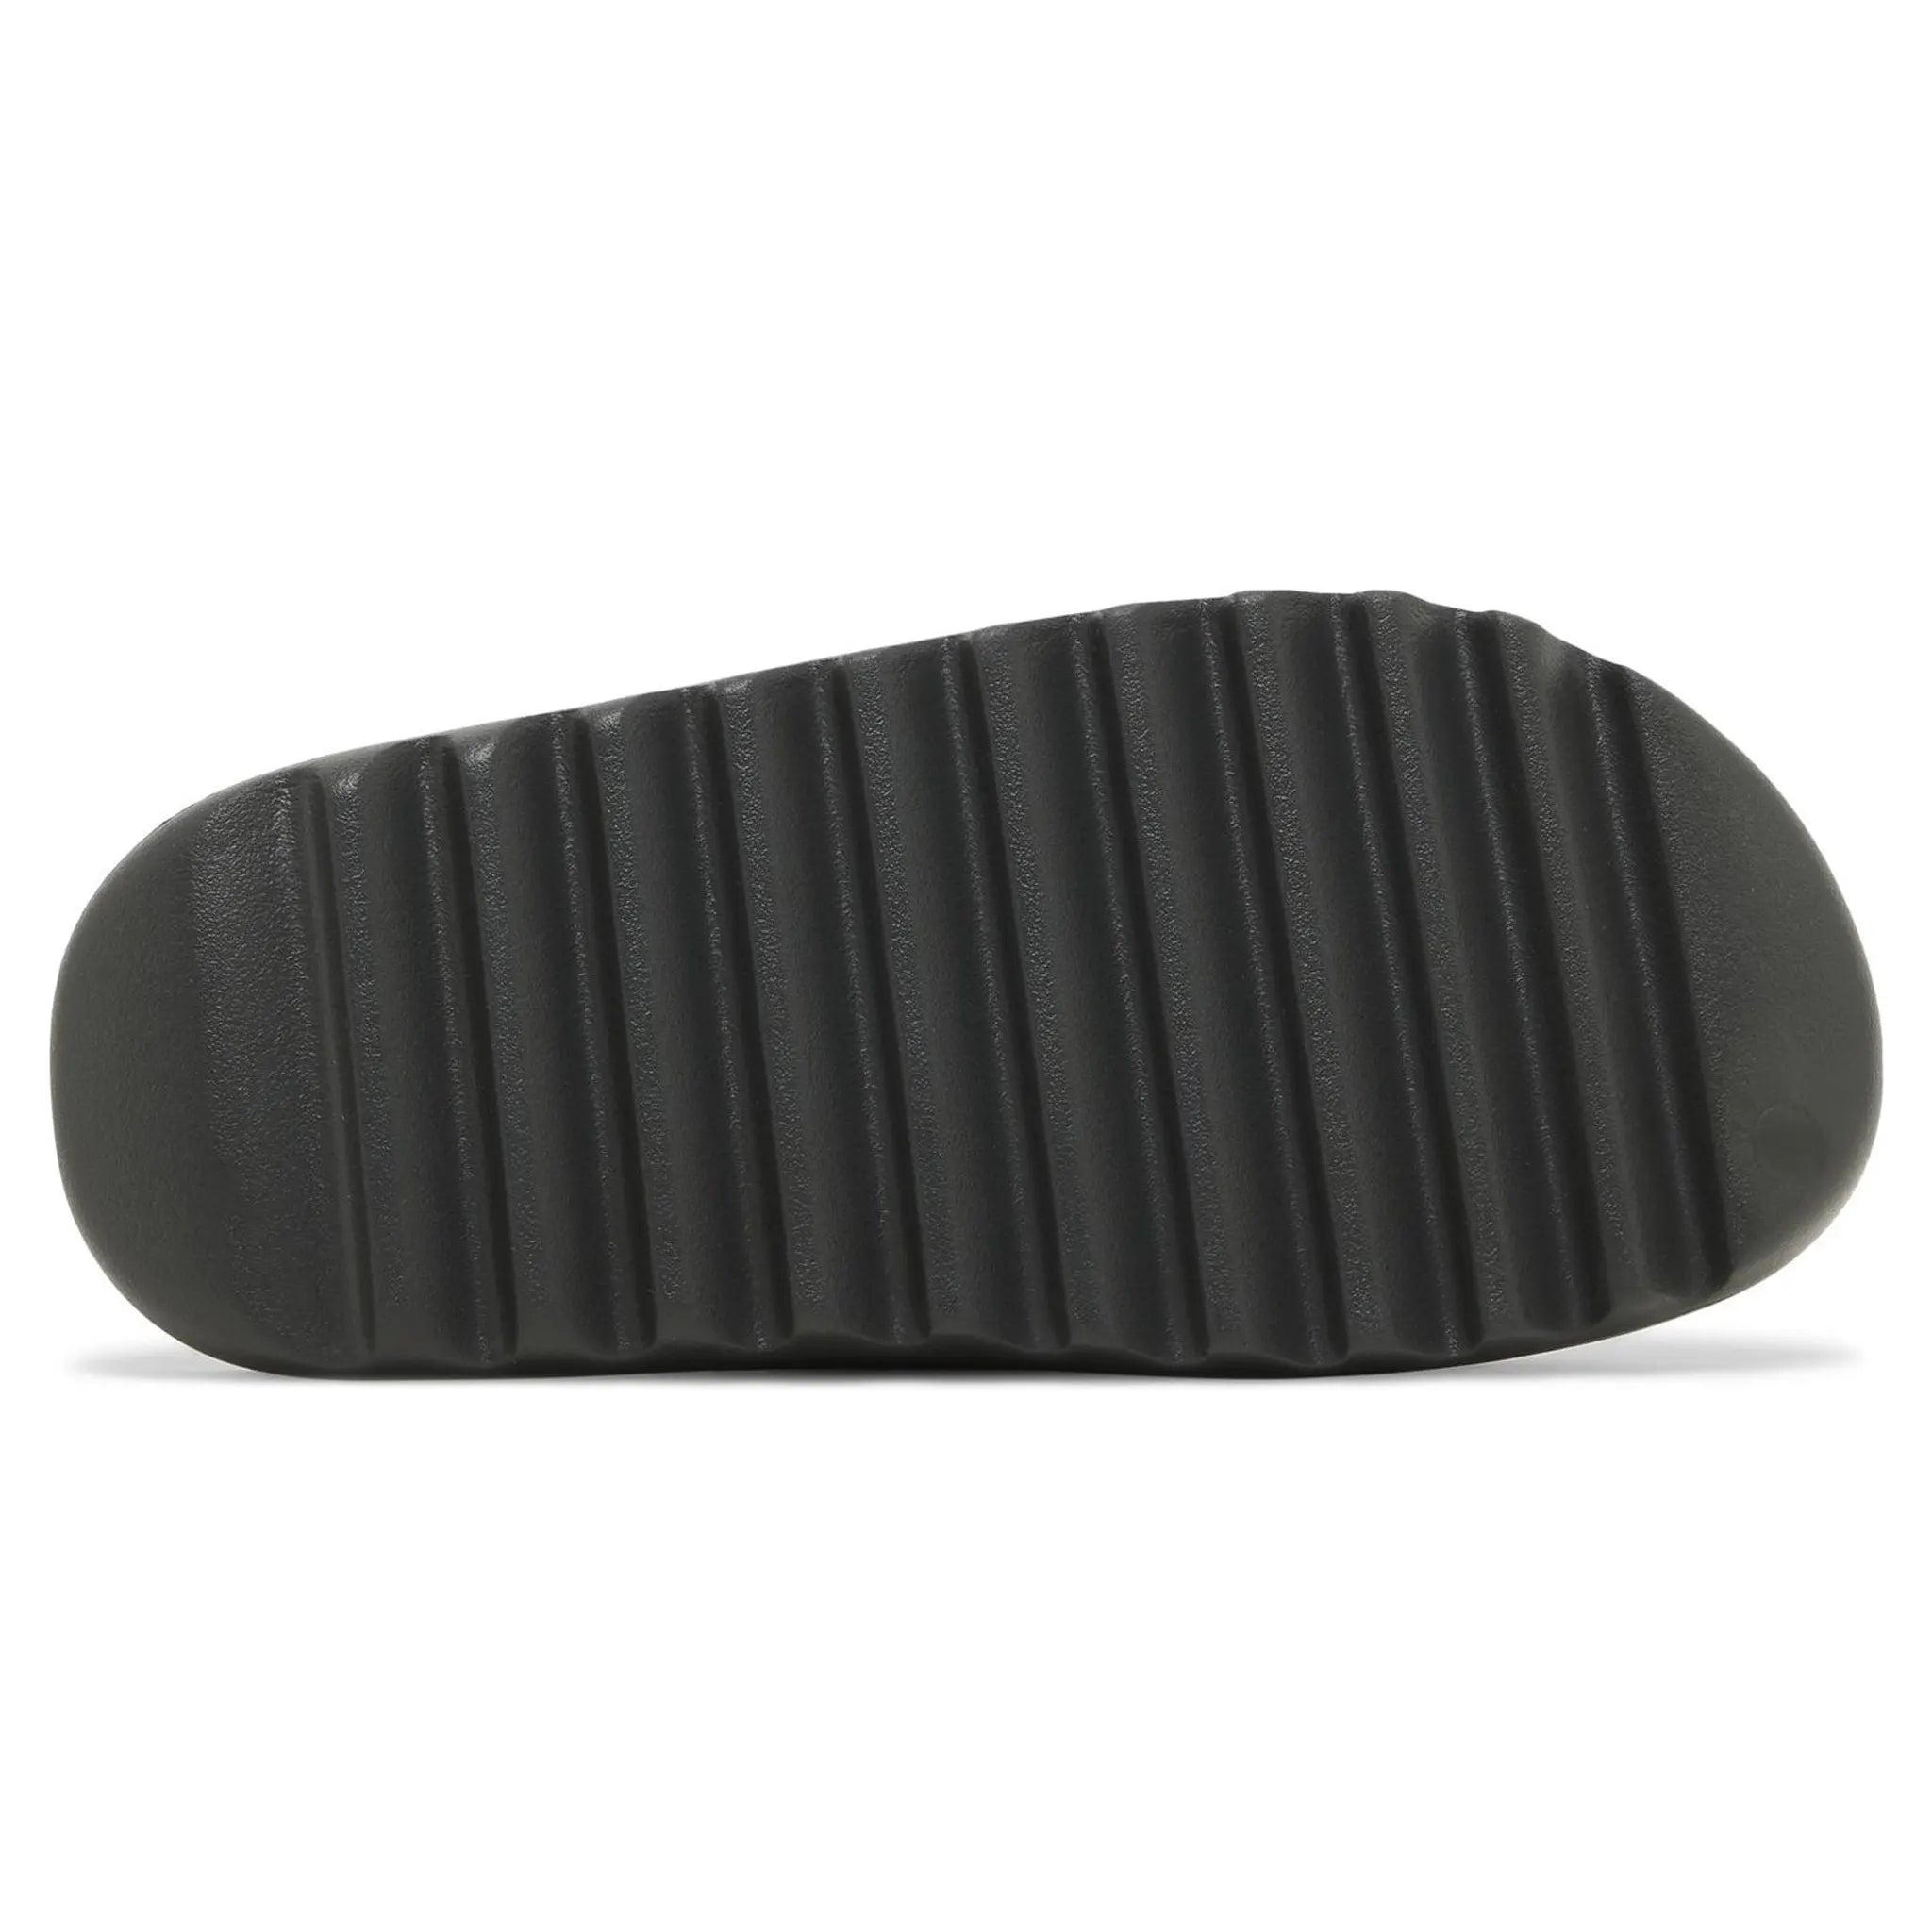 Sole view of Adidas Yeezy Slide Dark Onyx ID5103